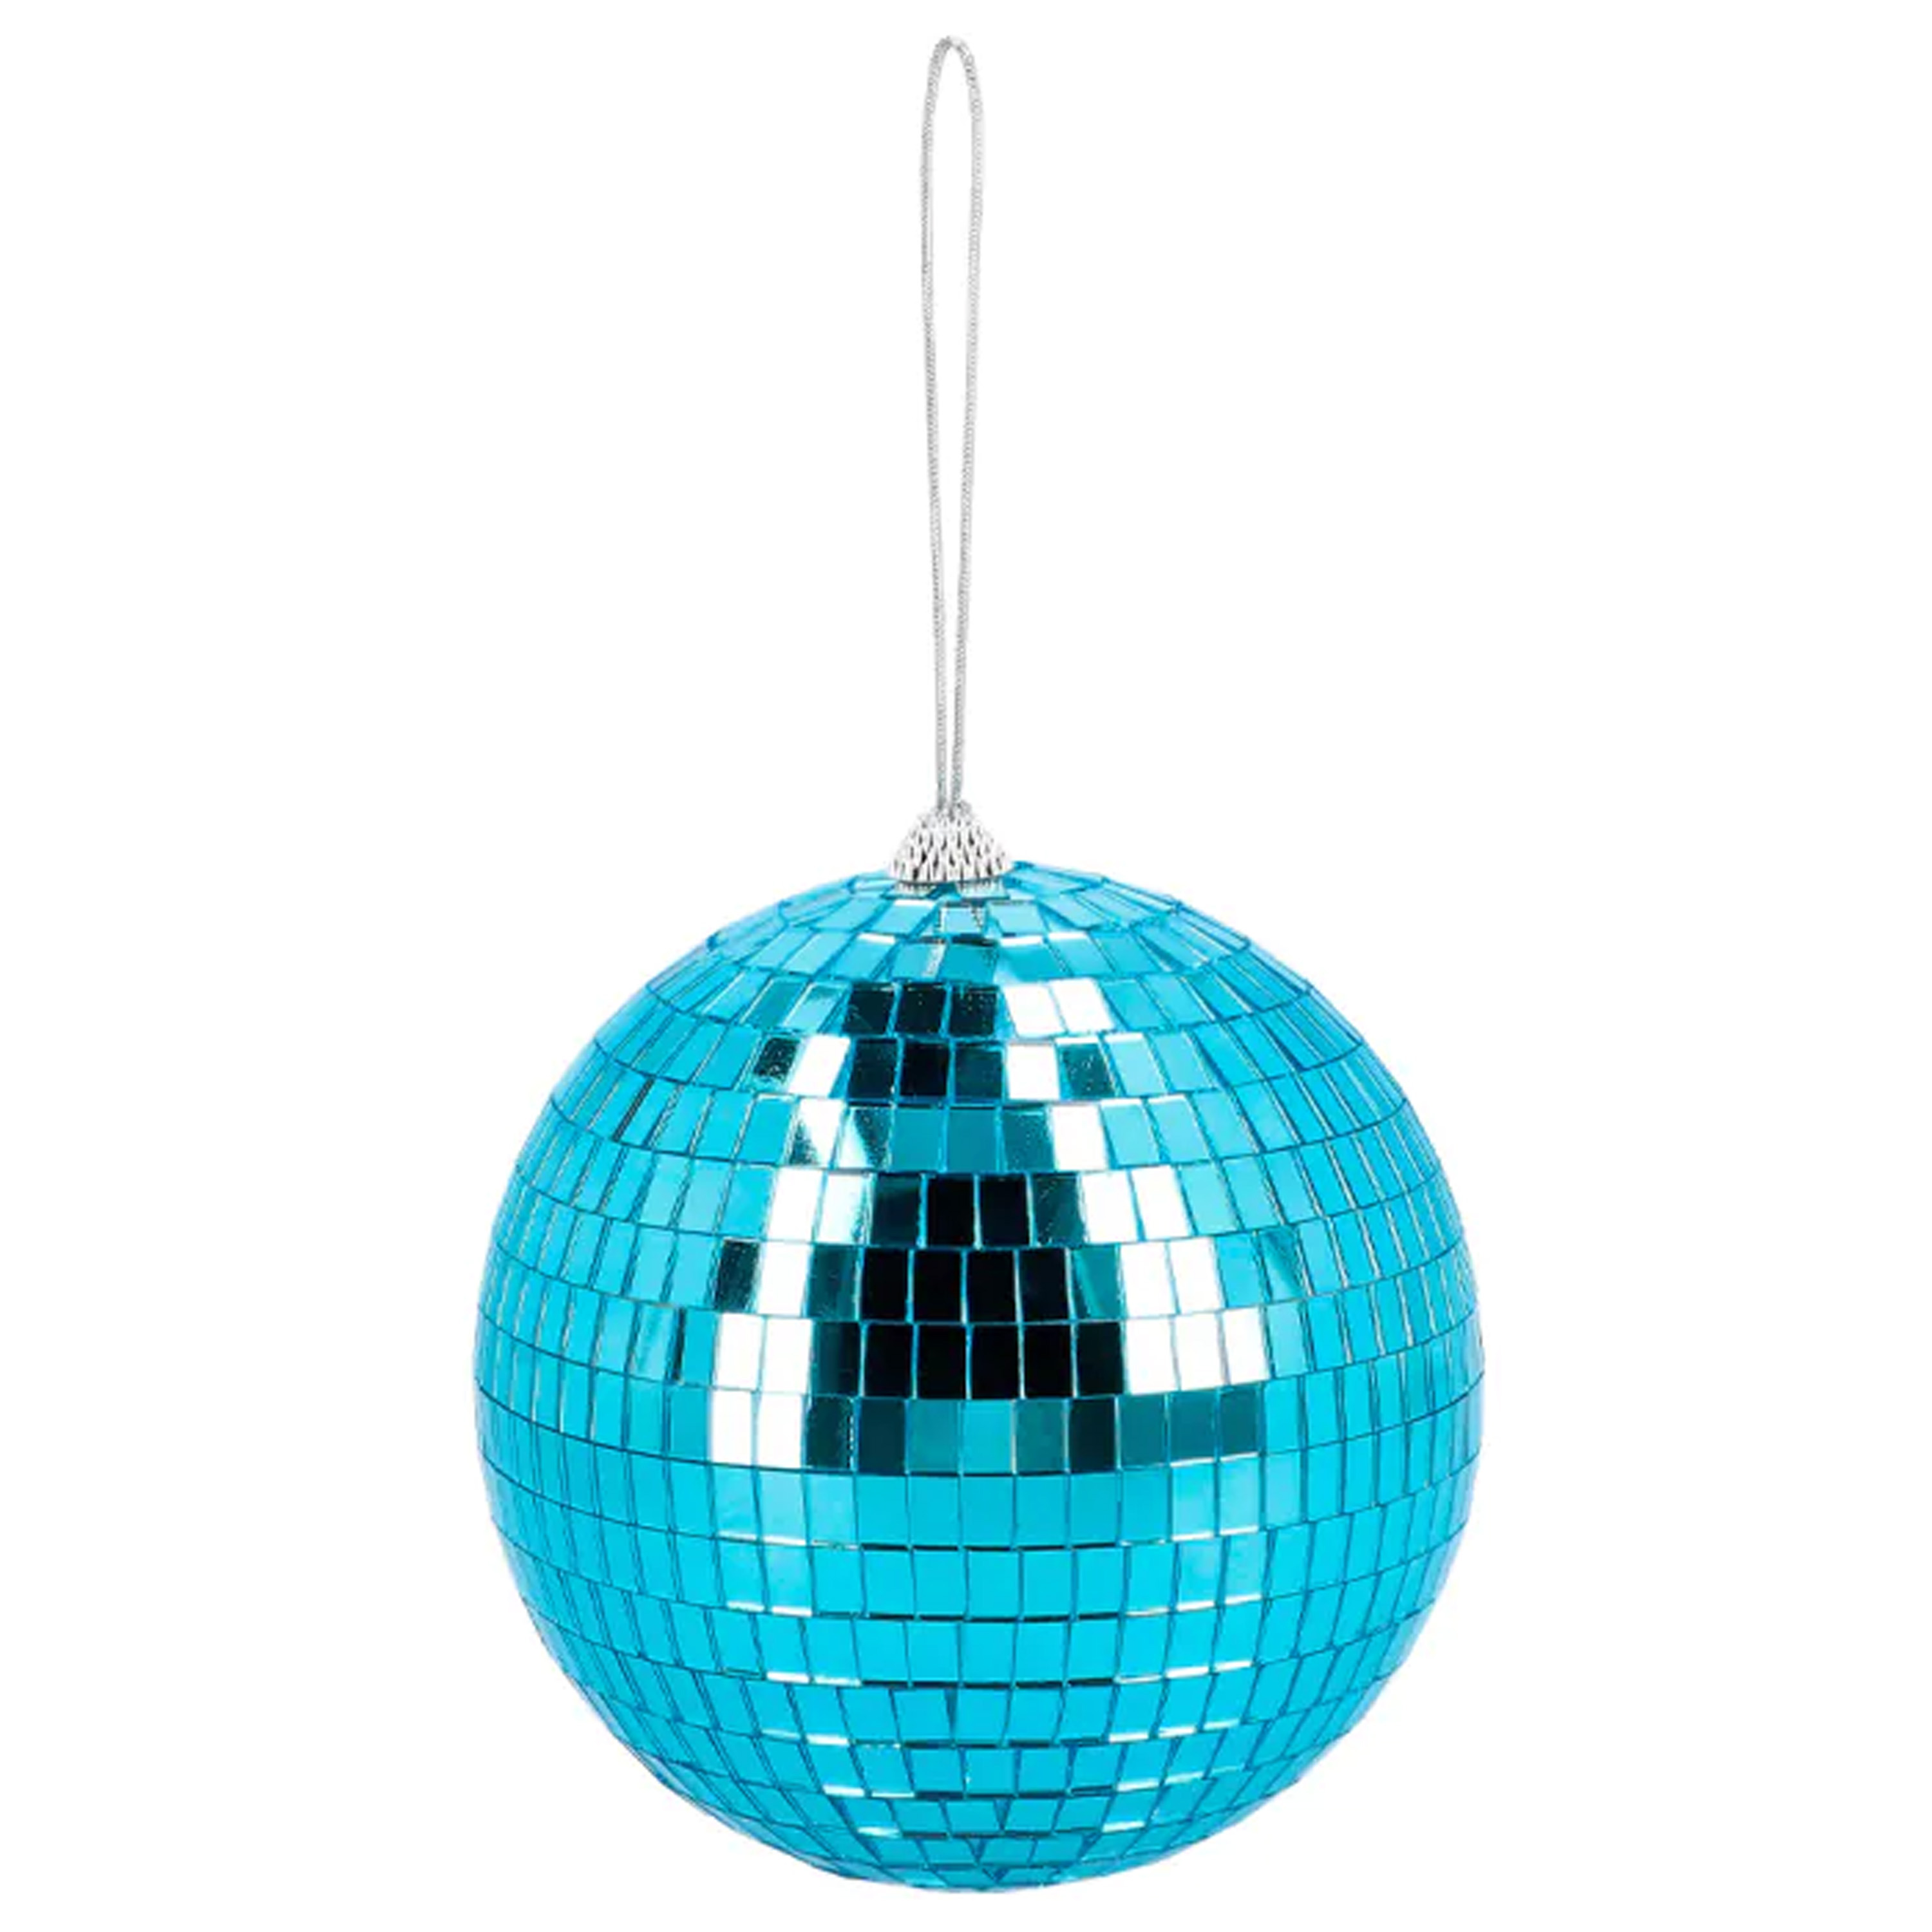 Boland Disco spiegel bal rond blauw Dia 15 cm Seventies-eighties thema versiering